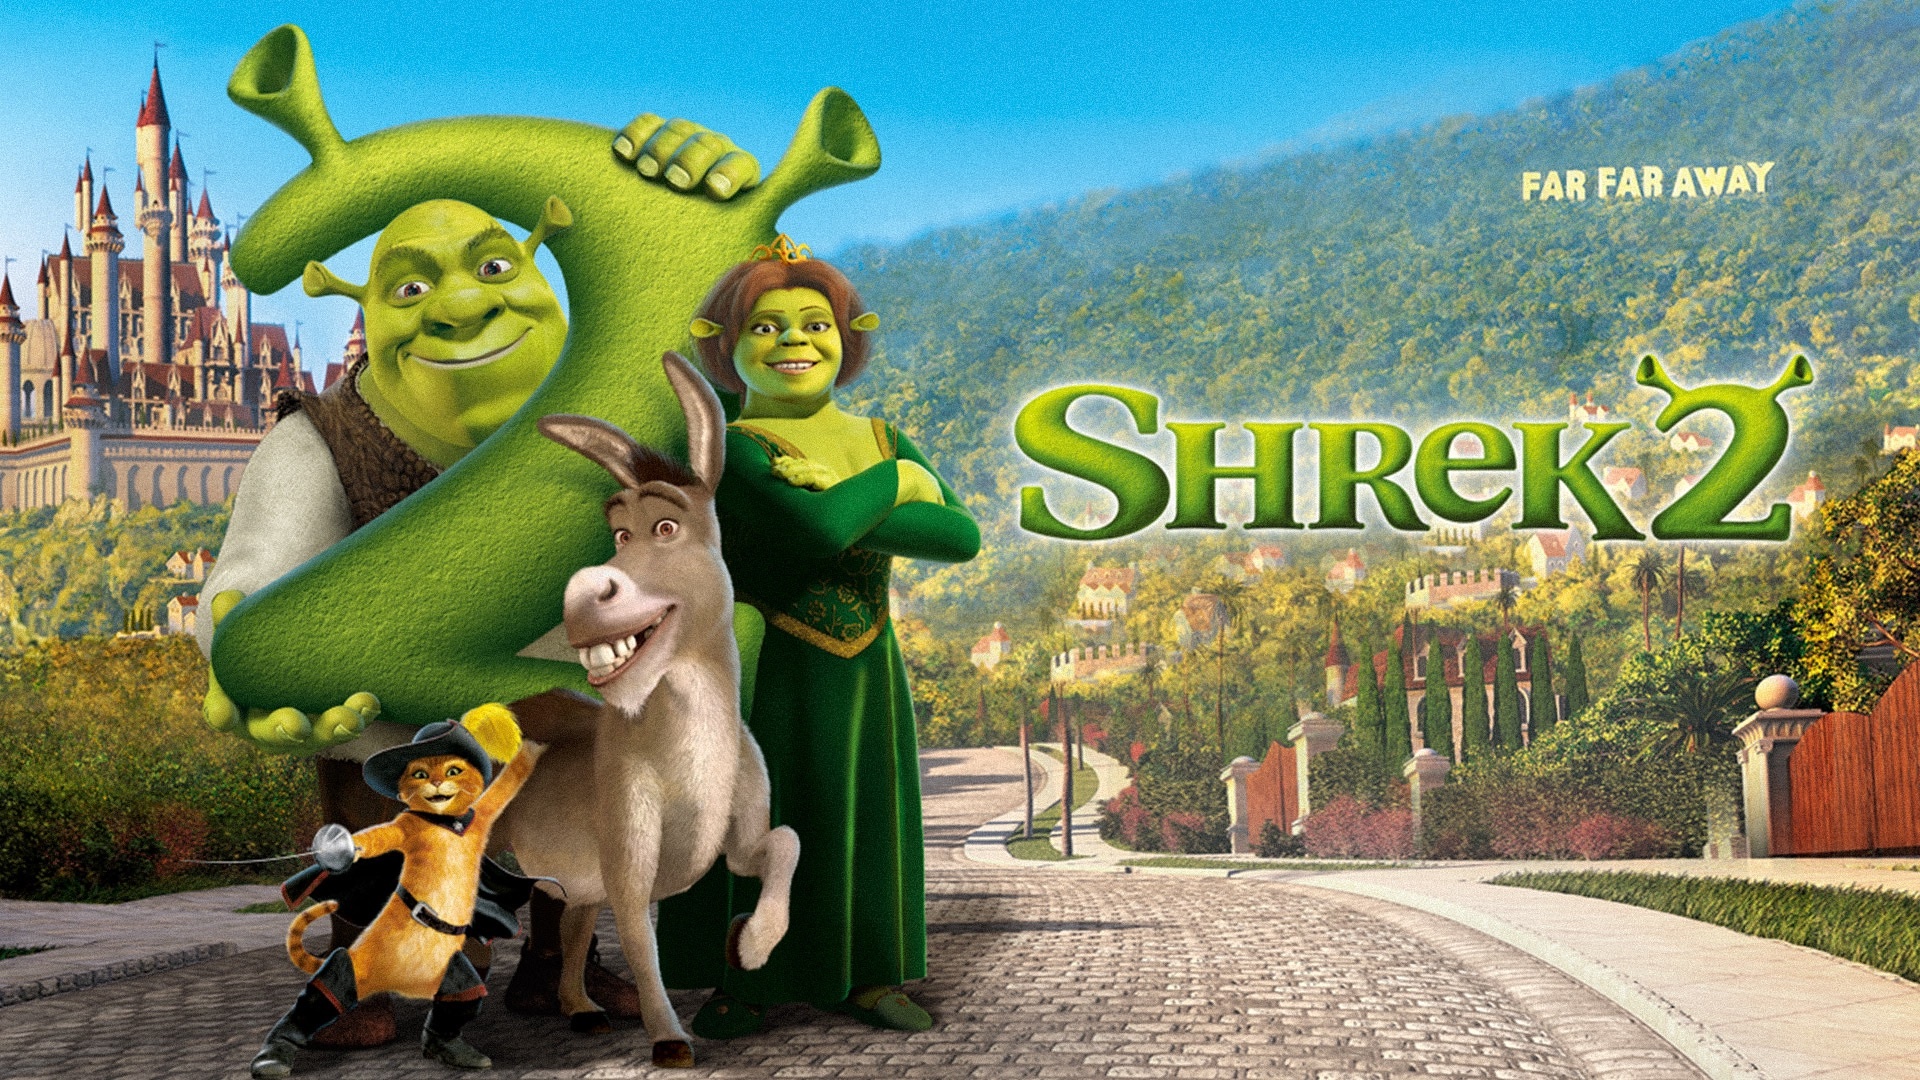 Shrek 2 wallpaper, Animated characters, Film favorites, Fairytale adventure, 1920x1080 Full HD Desktop